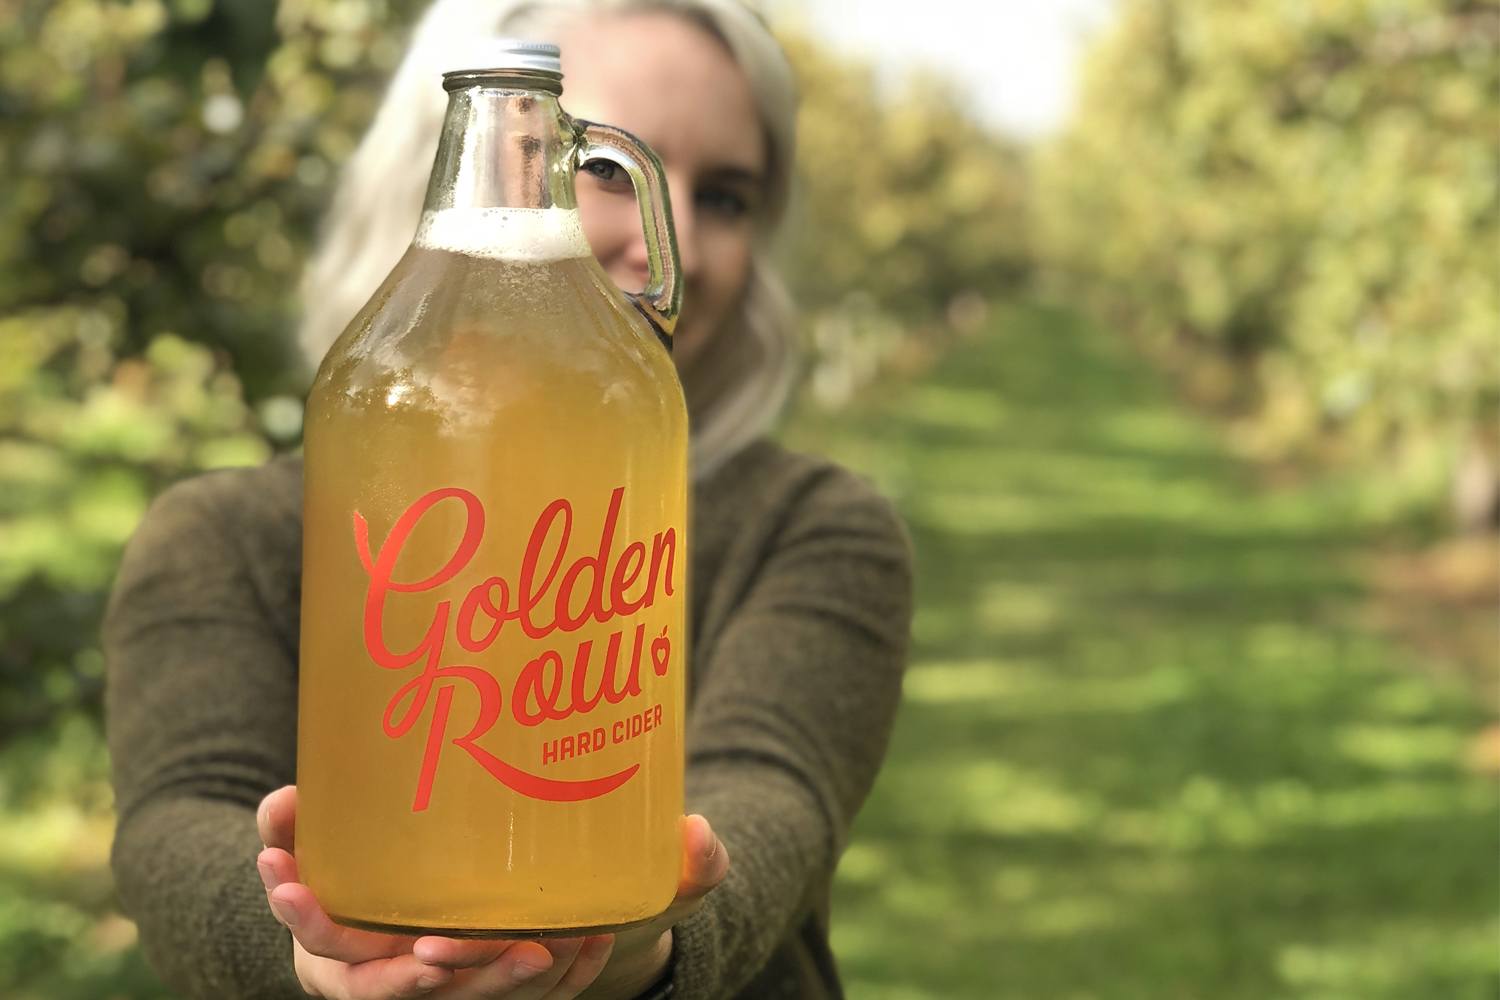 a bottle of golden row apple cider